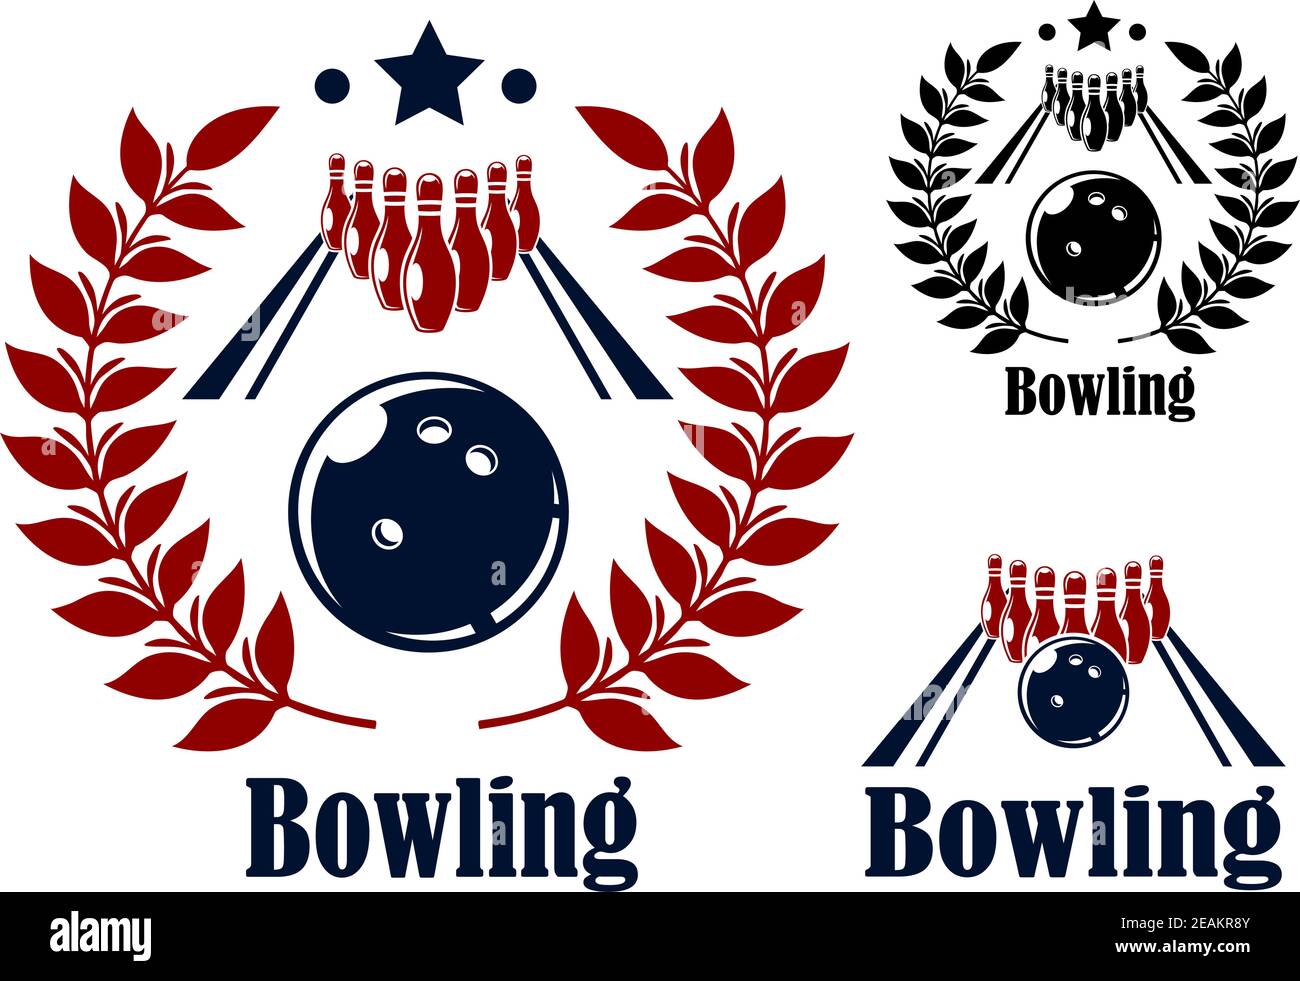 bowling symbols